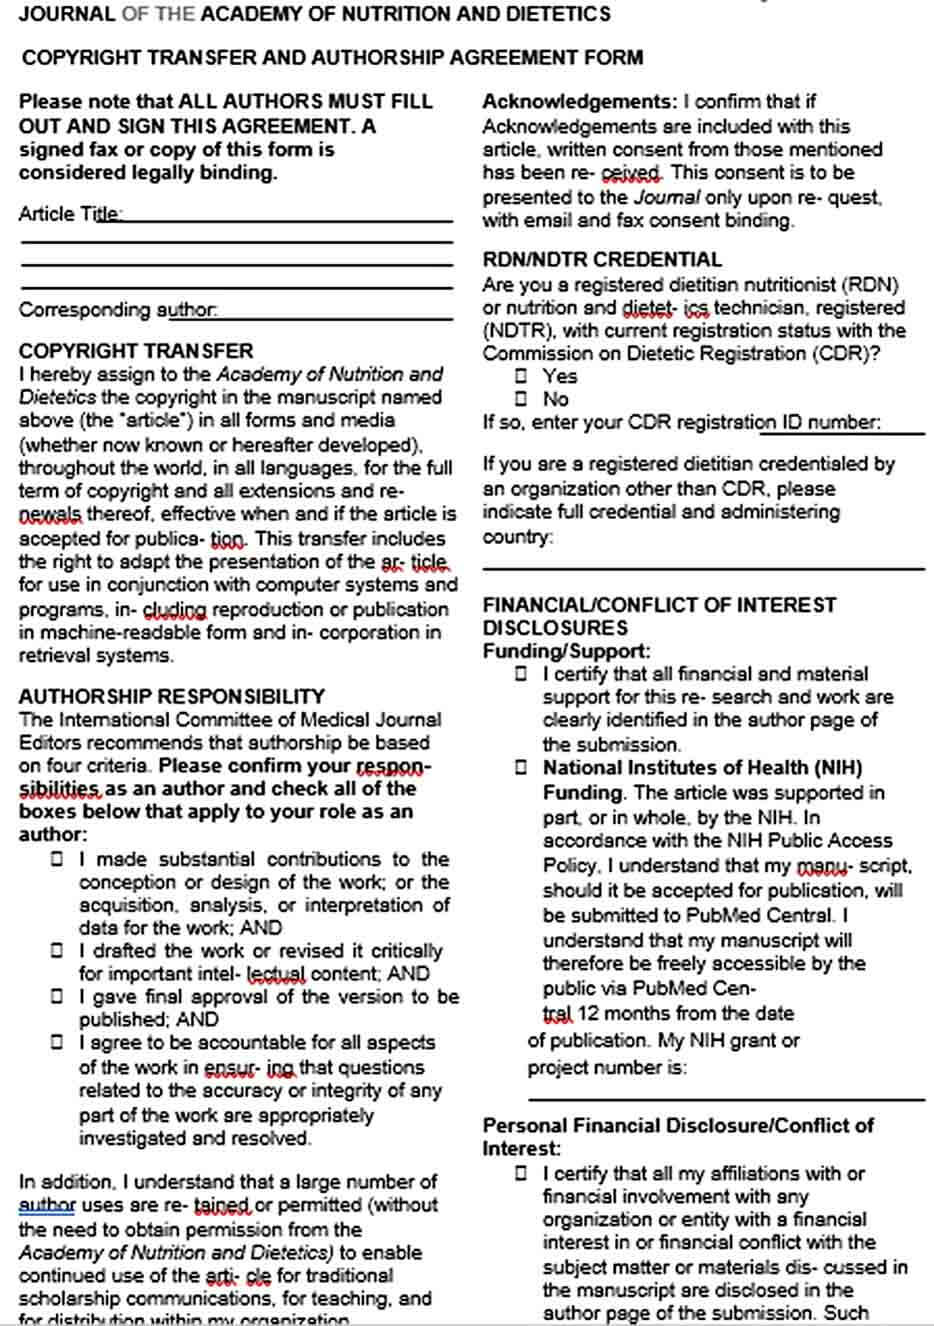 Sample Printable Copyright Agreement Form